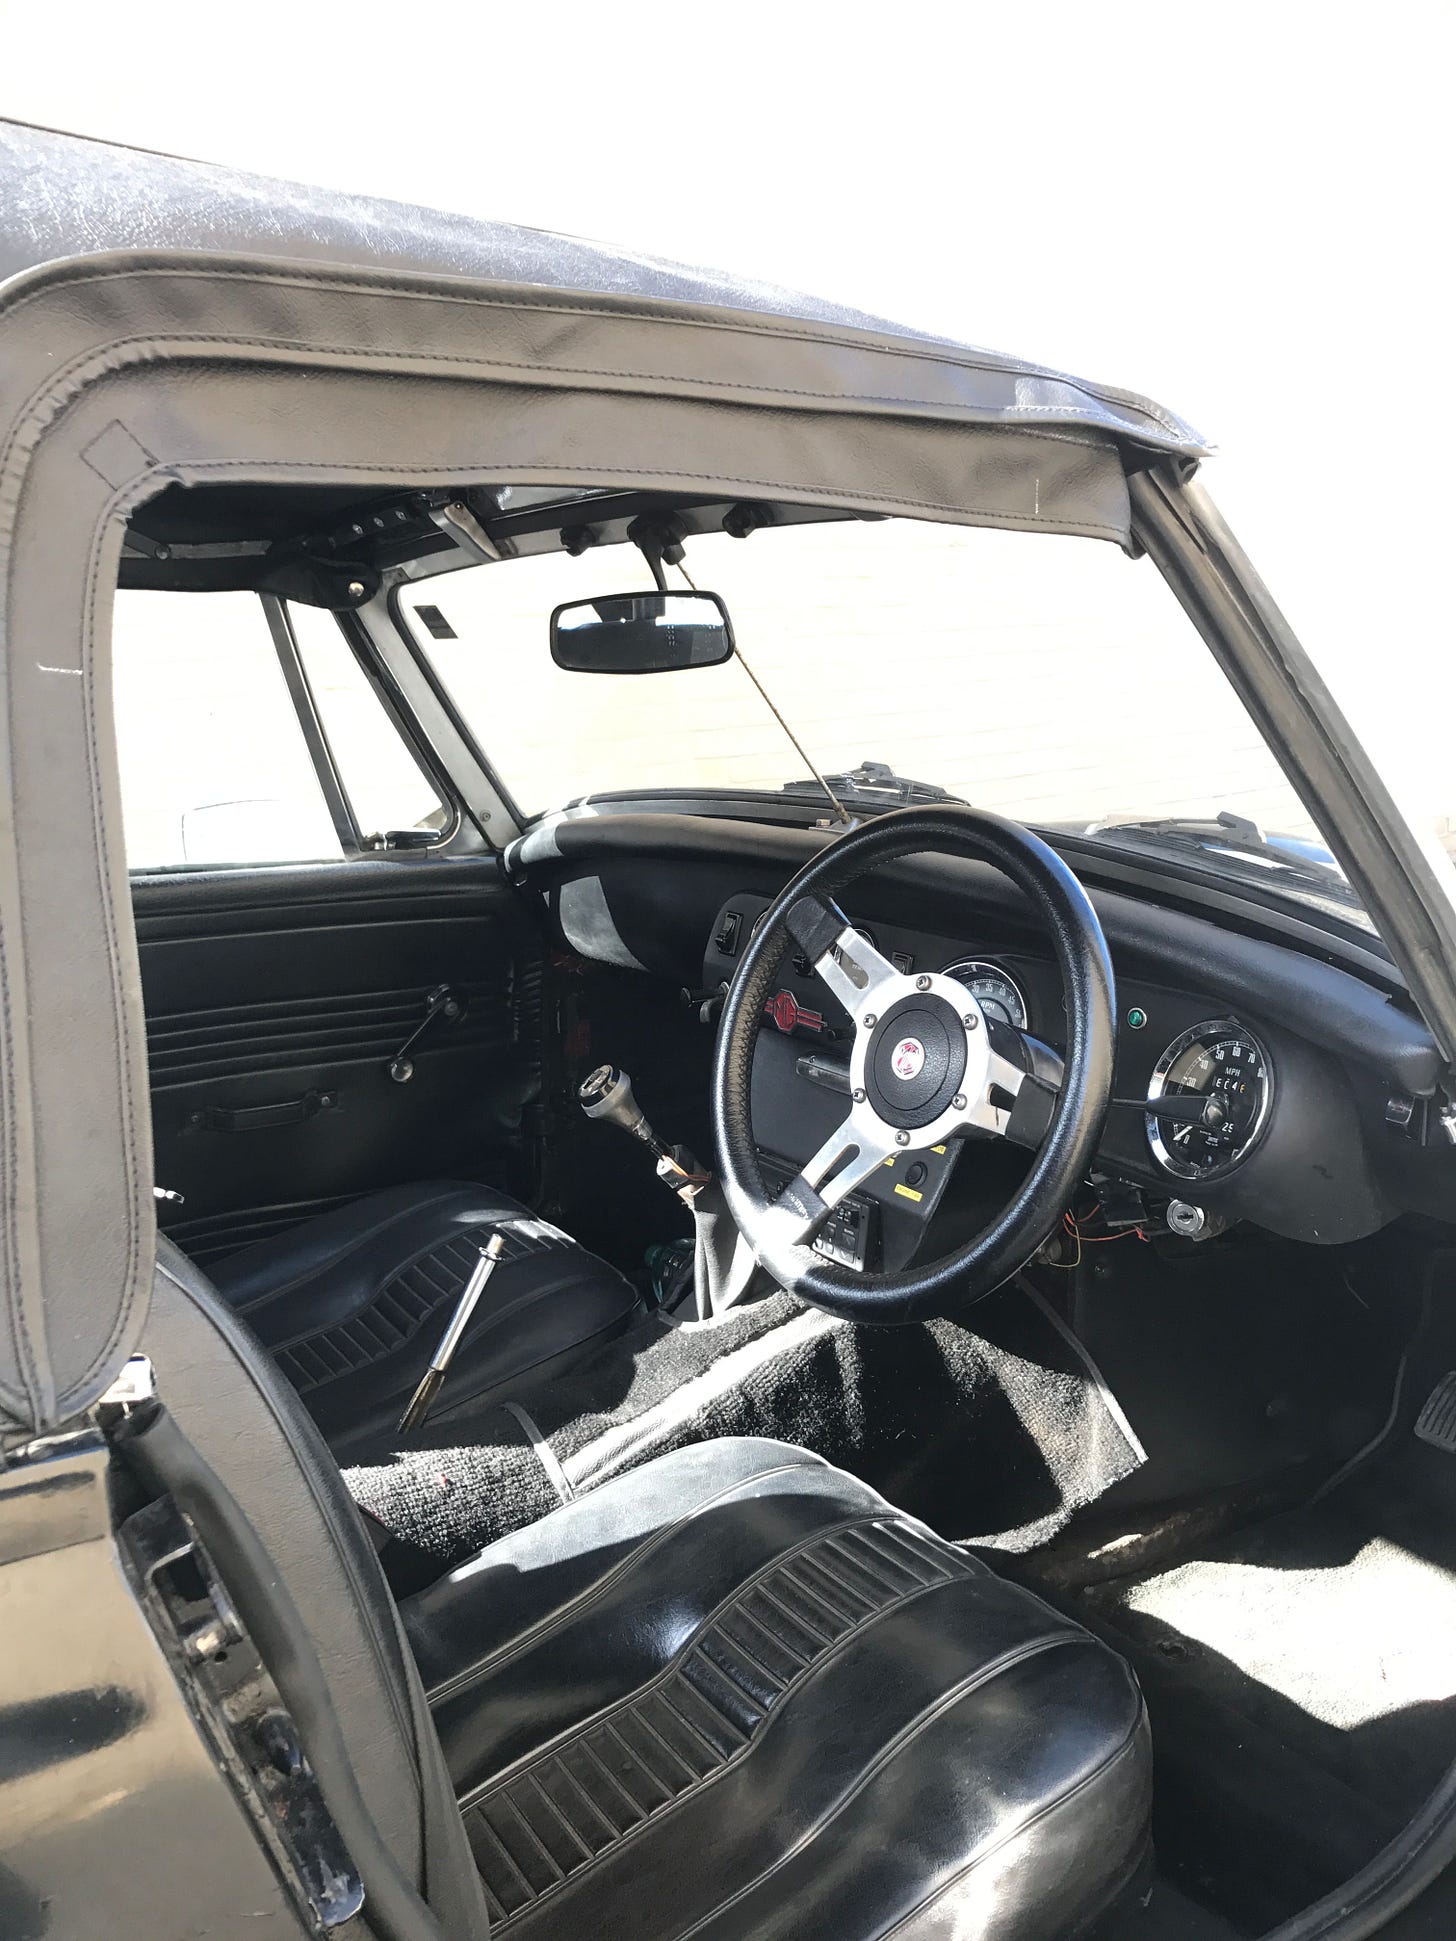 MG Midget interior - driver's side